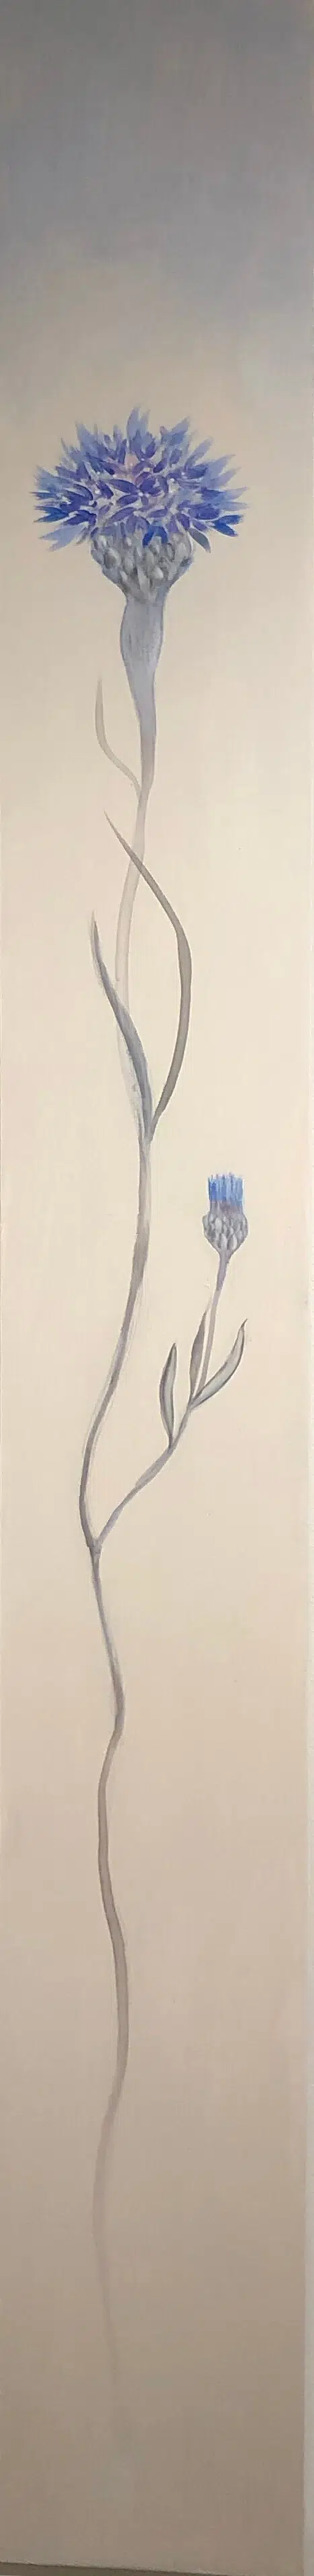 Fiona Hoop Cornflower Iris II 60x6